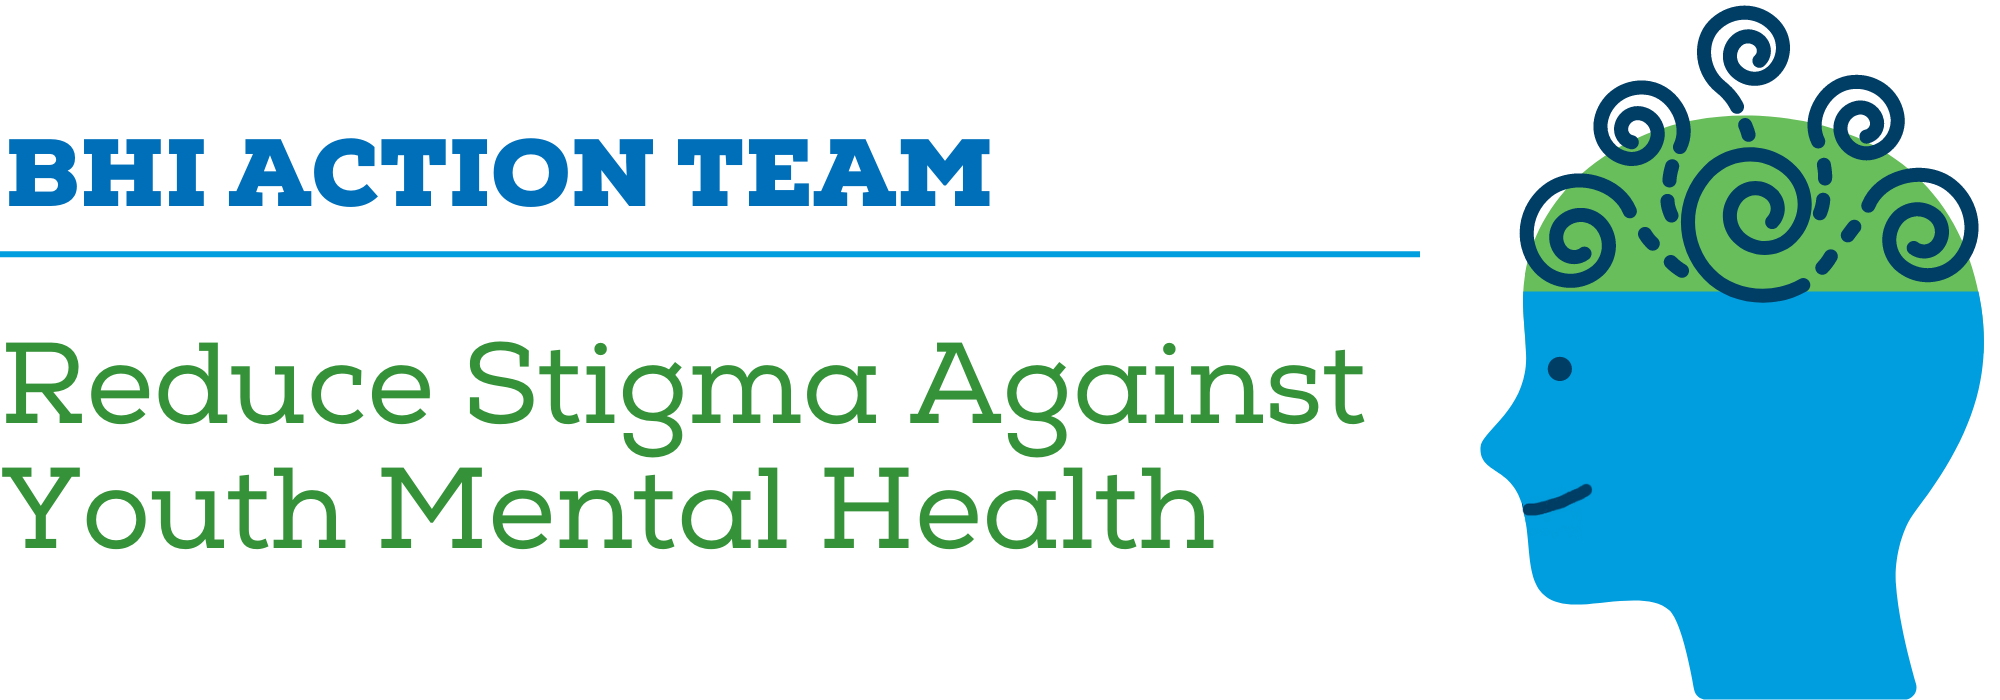 Reduce Stigma Against Youth Mental Health